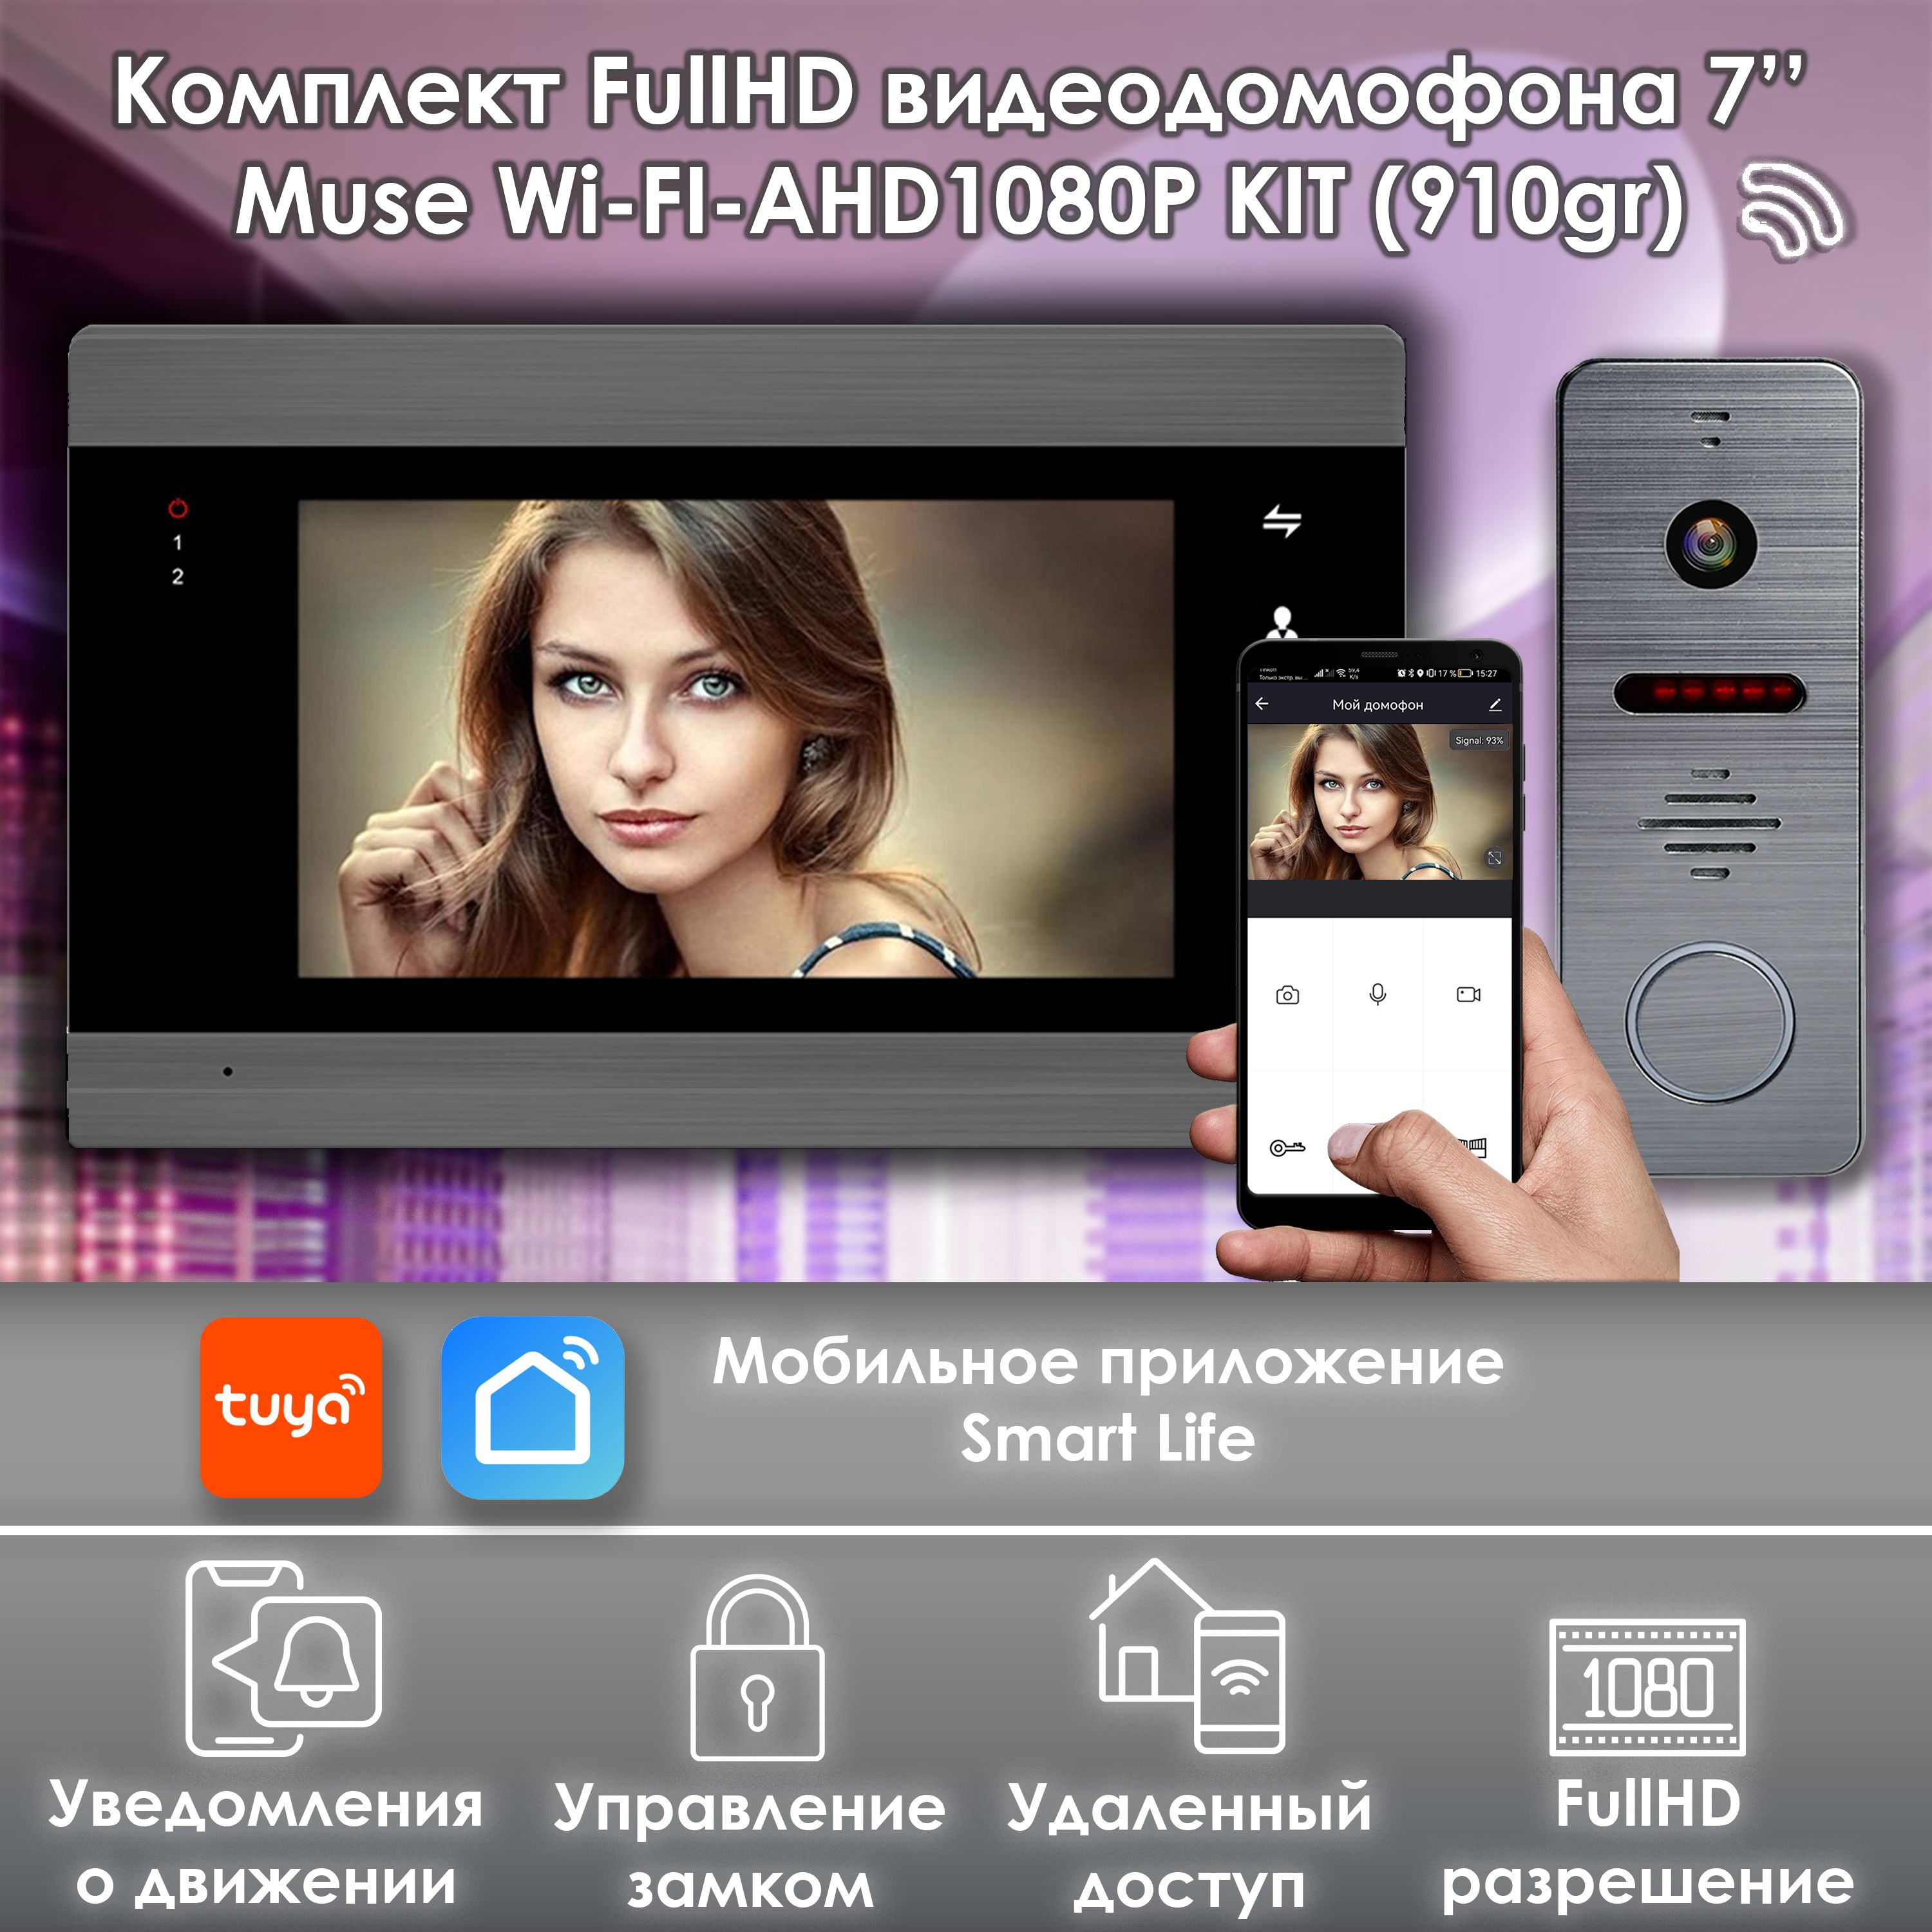 Комплект видеодомофона Alfavision MUSE WIFI-KIT FullHD (910gr) 7 дюймов